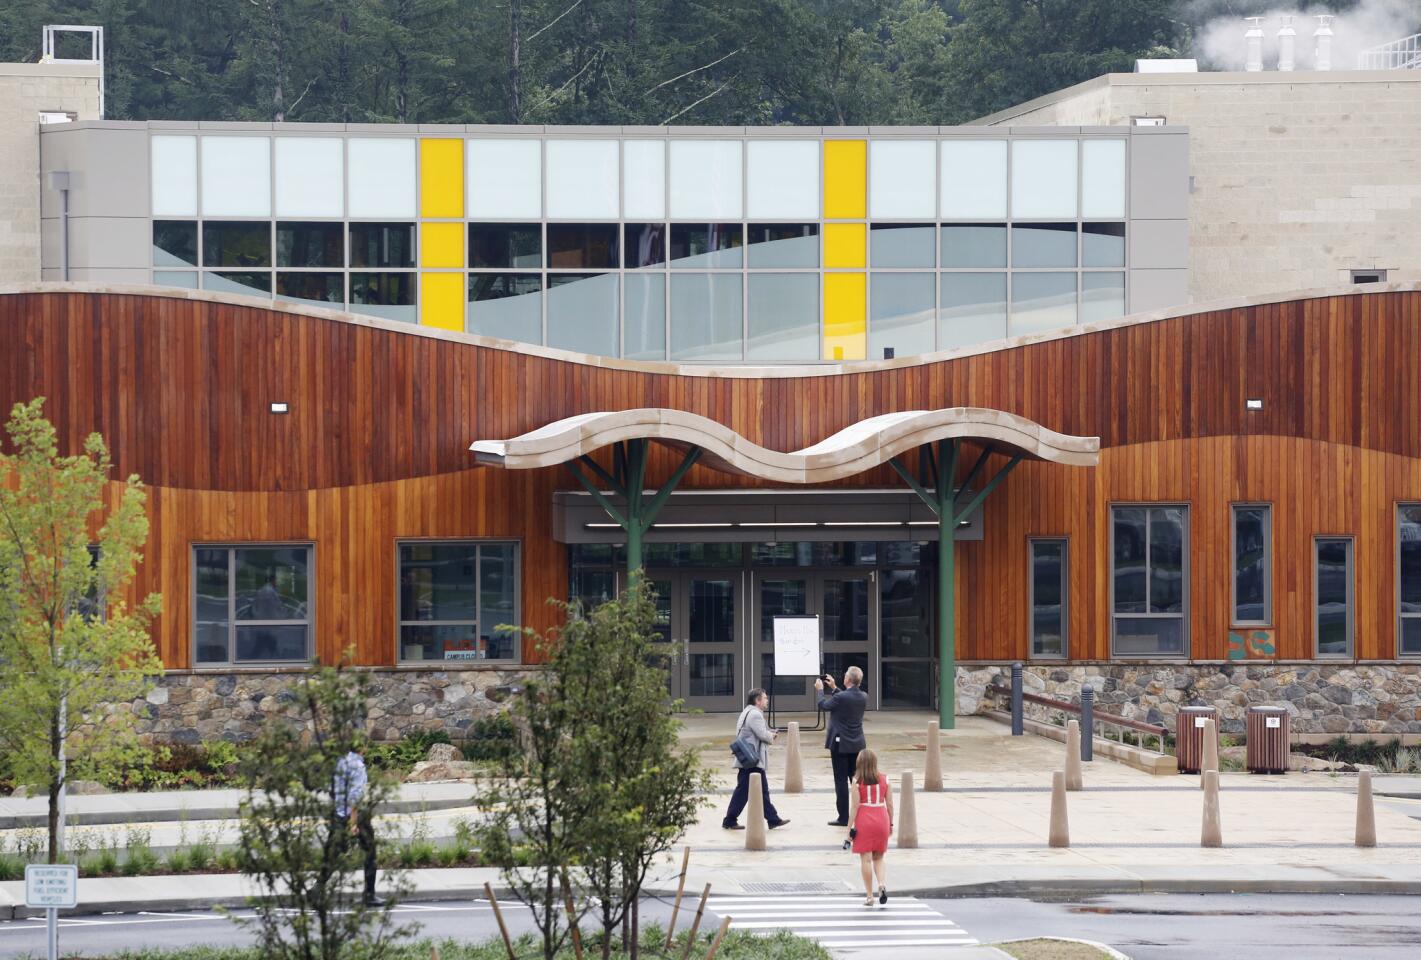 Design for a new Sandy Hook Elementary School